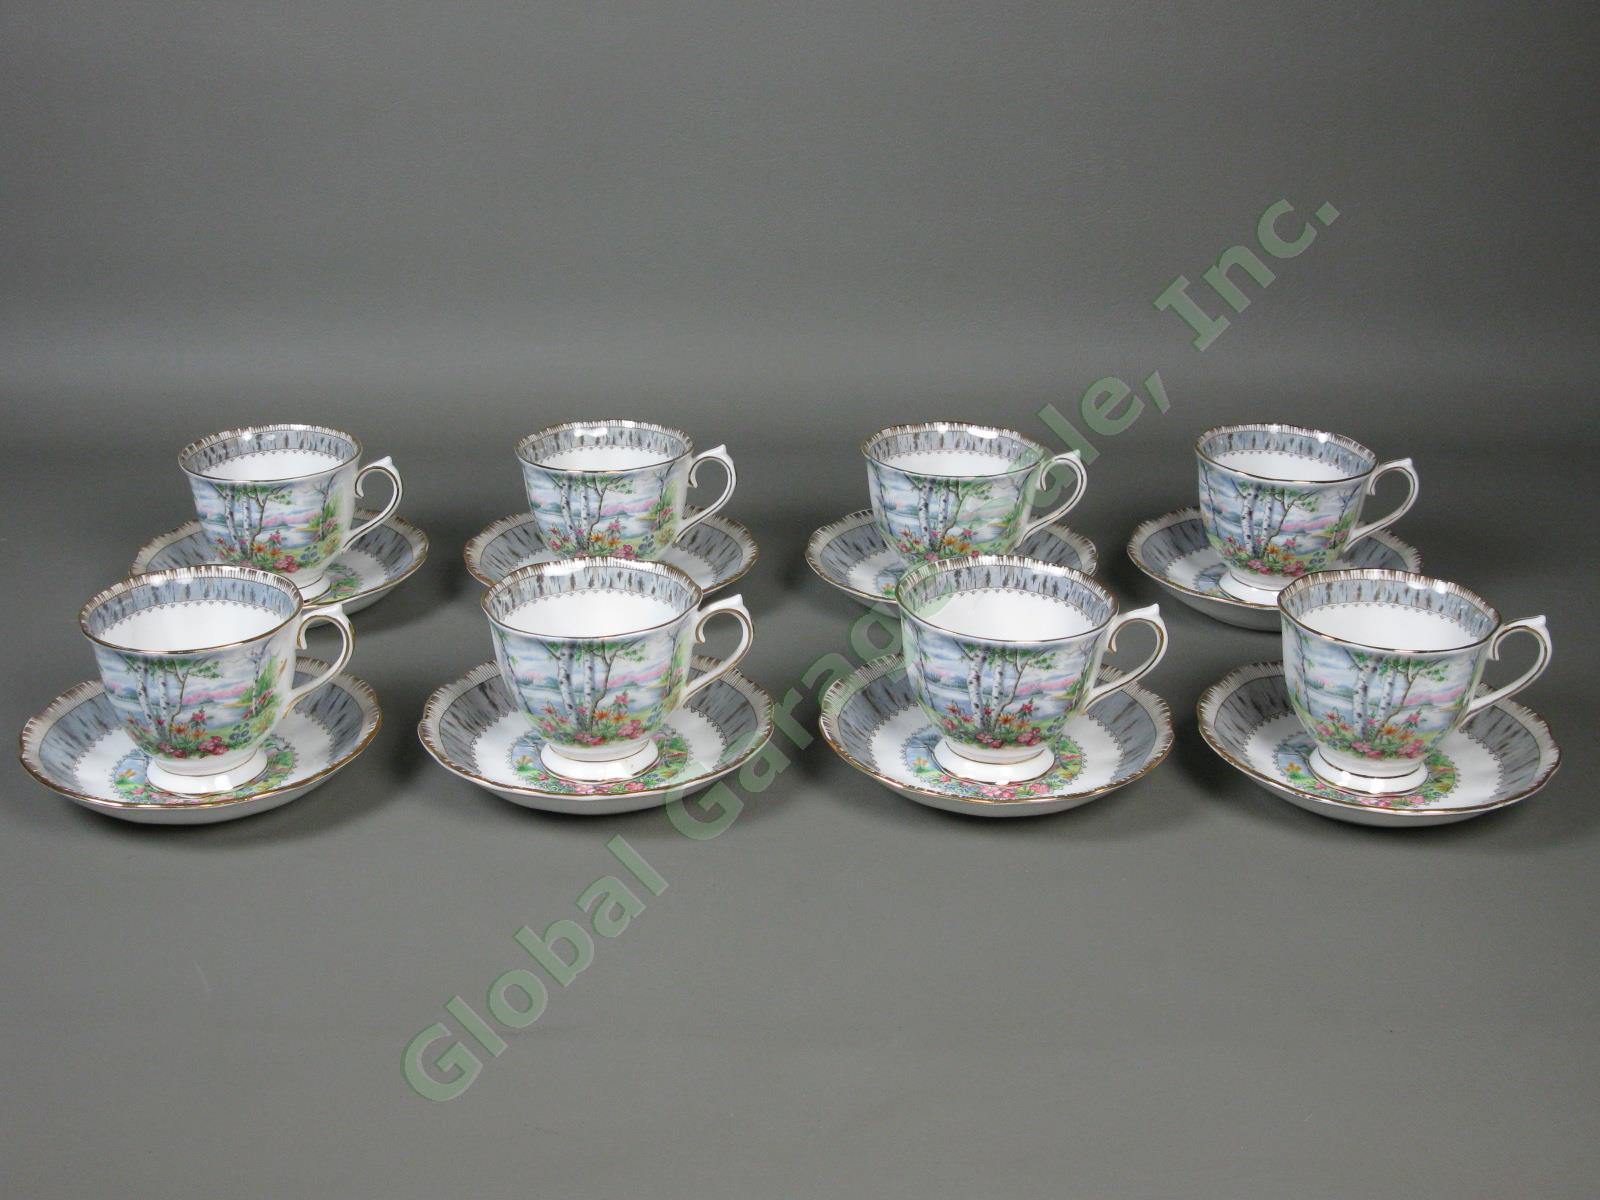 8 Vintage Royal Albert Silver Birch Bone China Teacups Tea Cups + Saucers Set NR